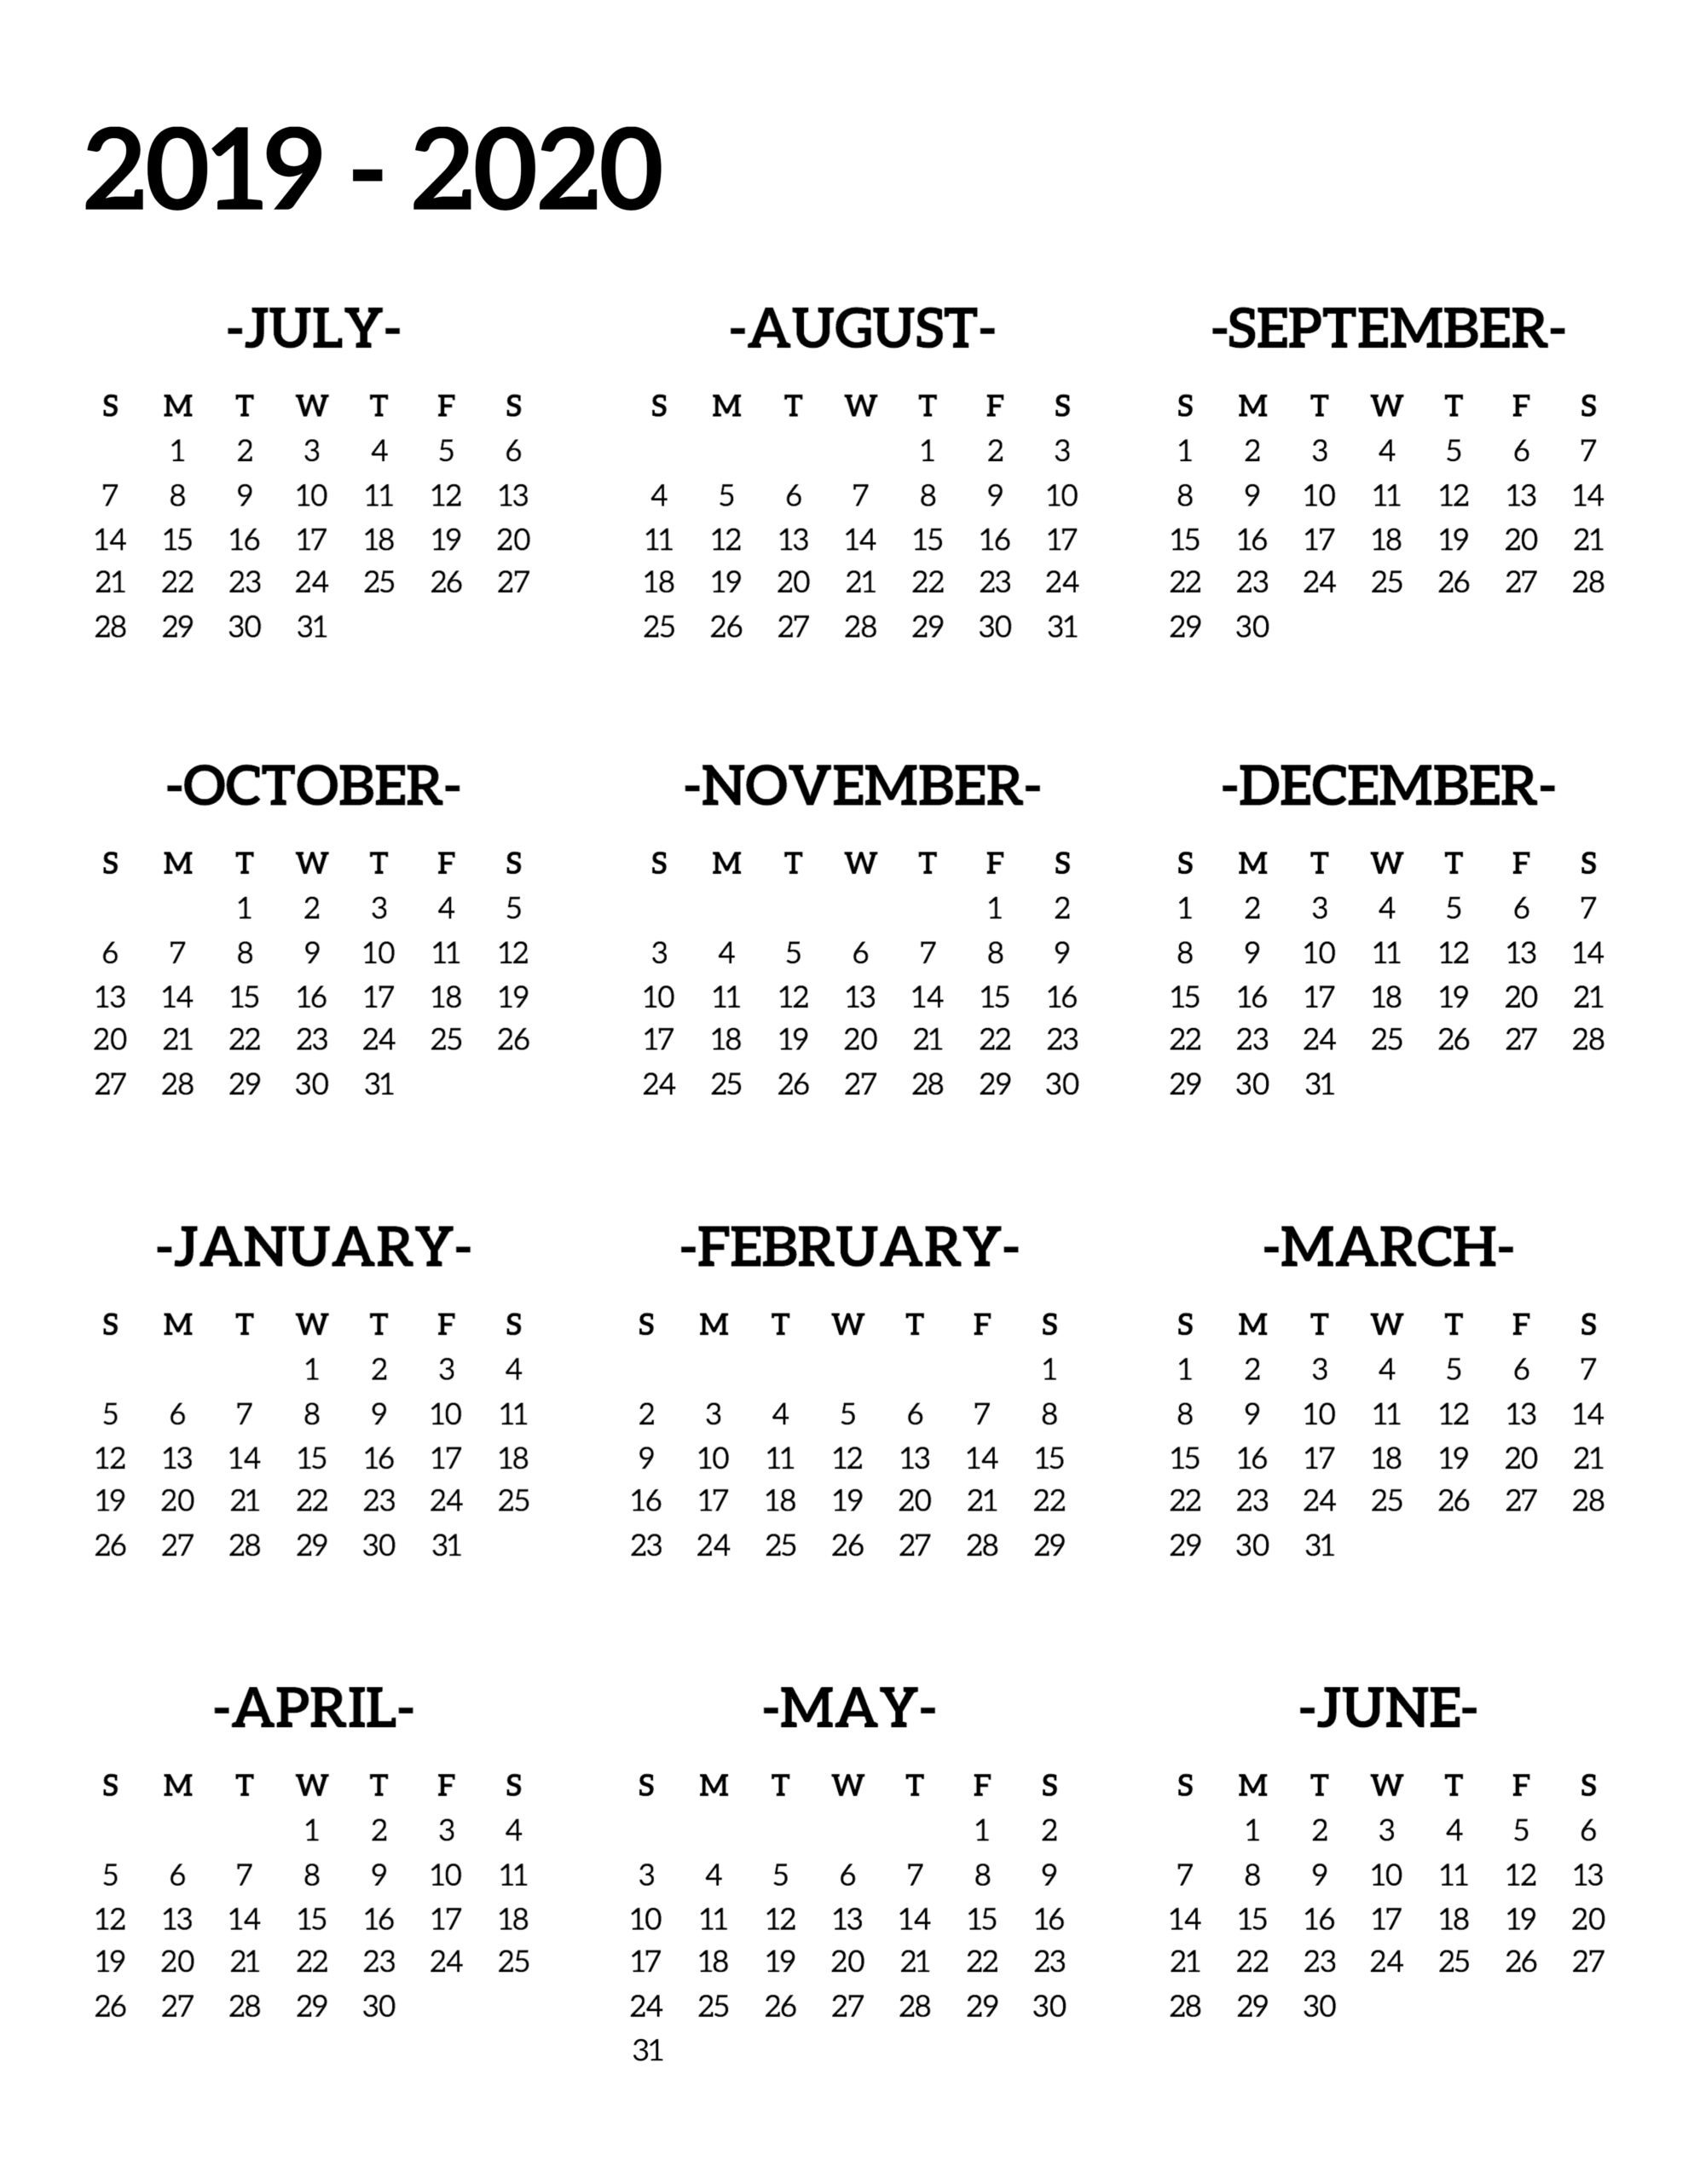 2019-2020 One Page School Calendar Printable - Paper Trail Design regarding Free Printable 2019-2020  Calendar With Editing